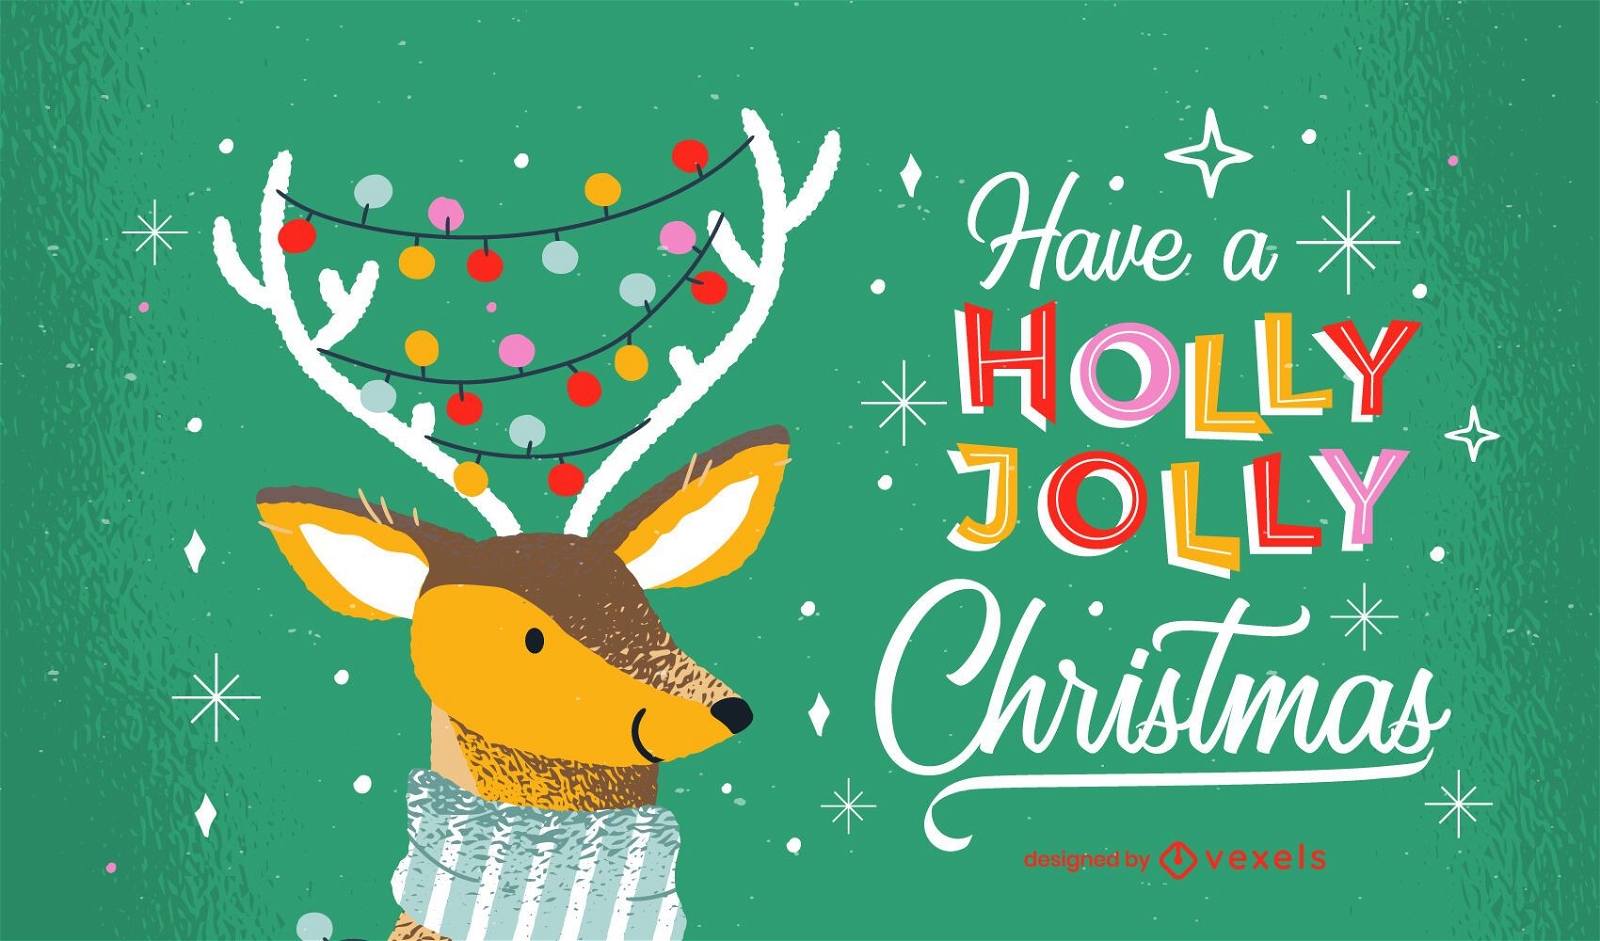 Holly jolly christmas lettering design